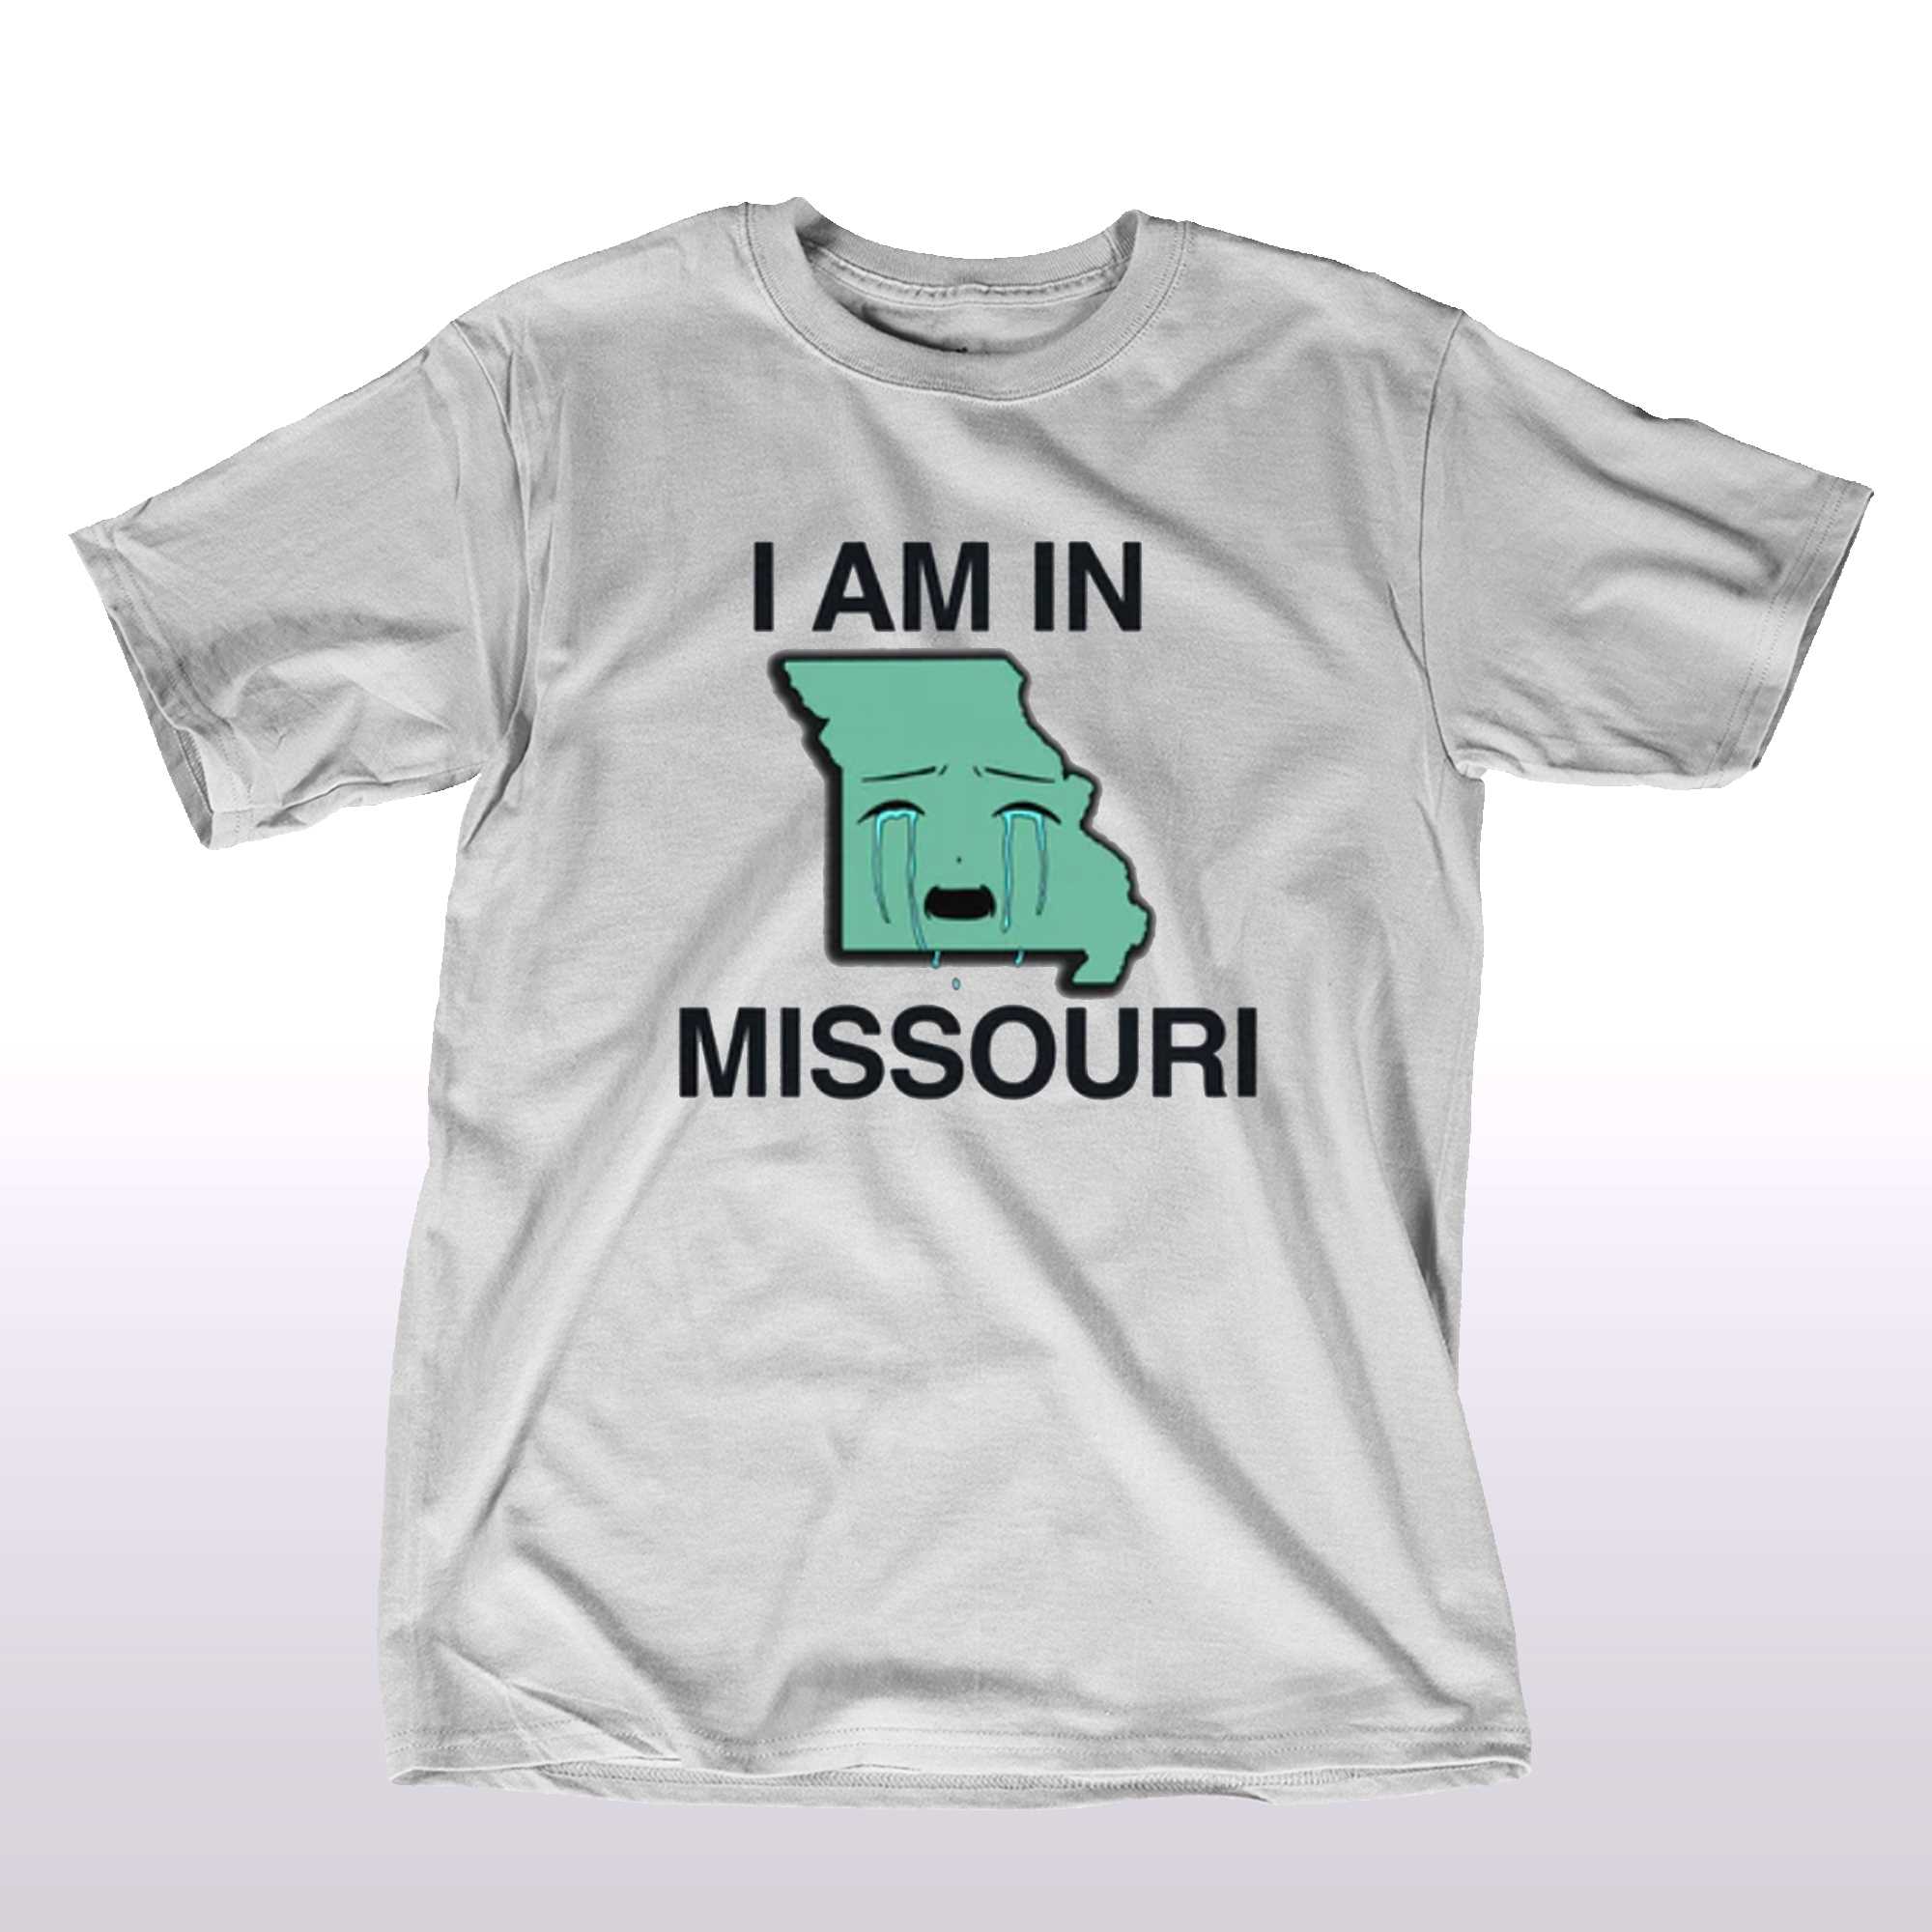 Am In Missouri T-shirt Shibtee Clothing